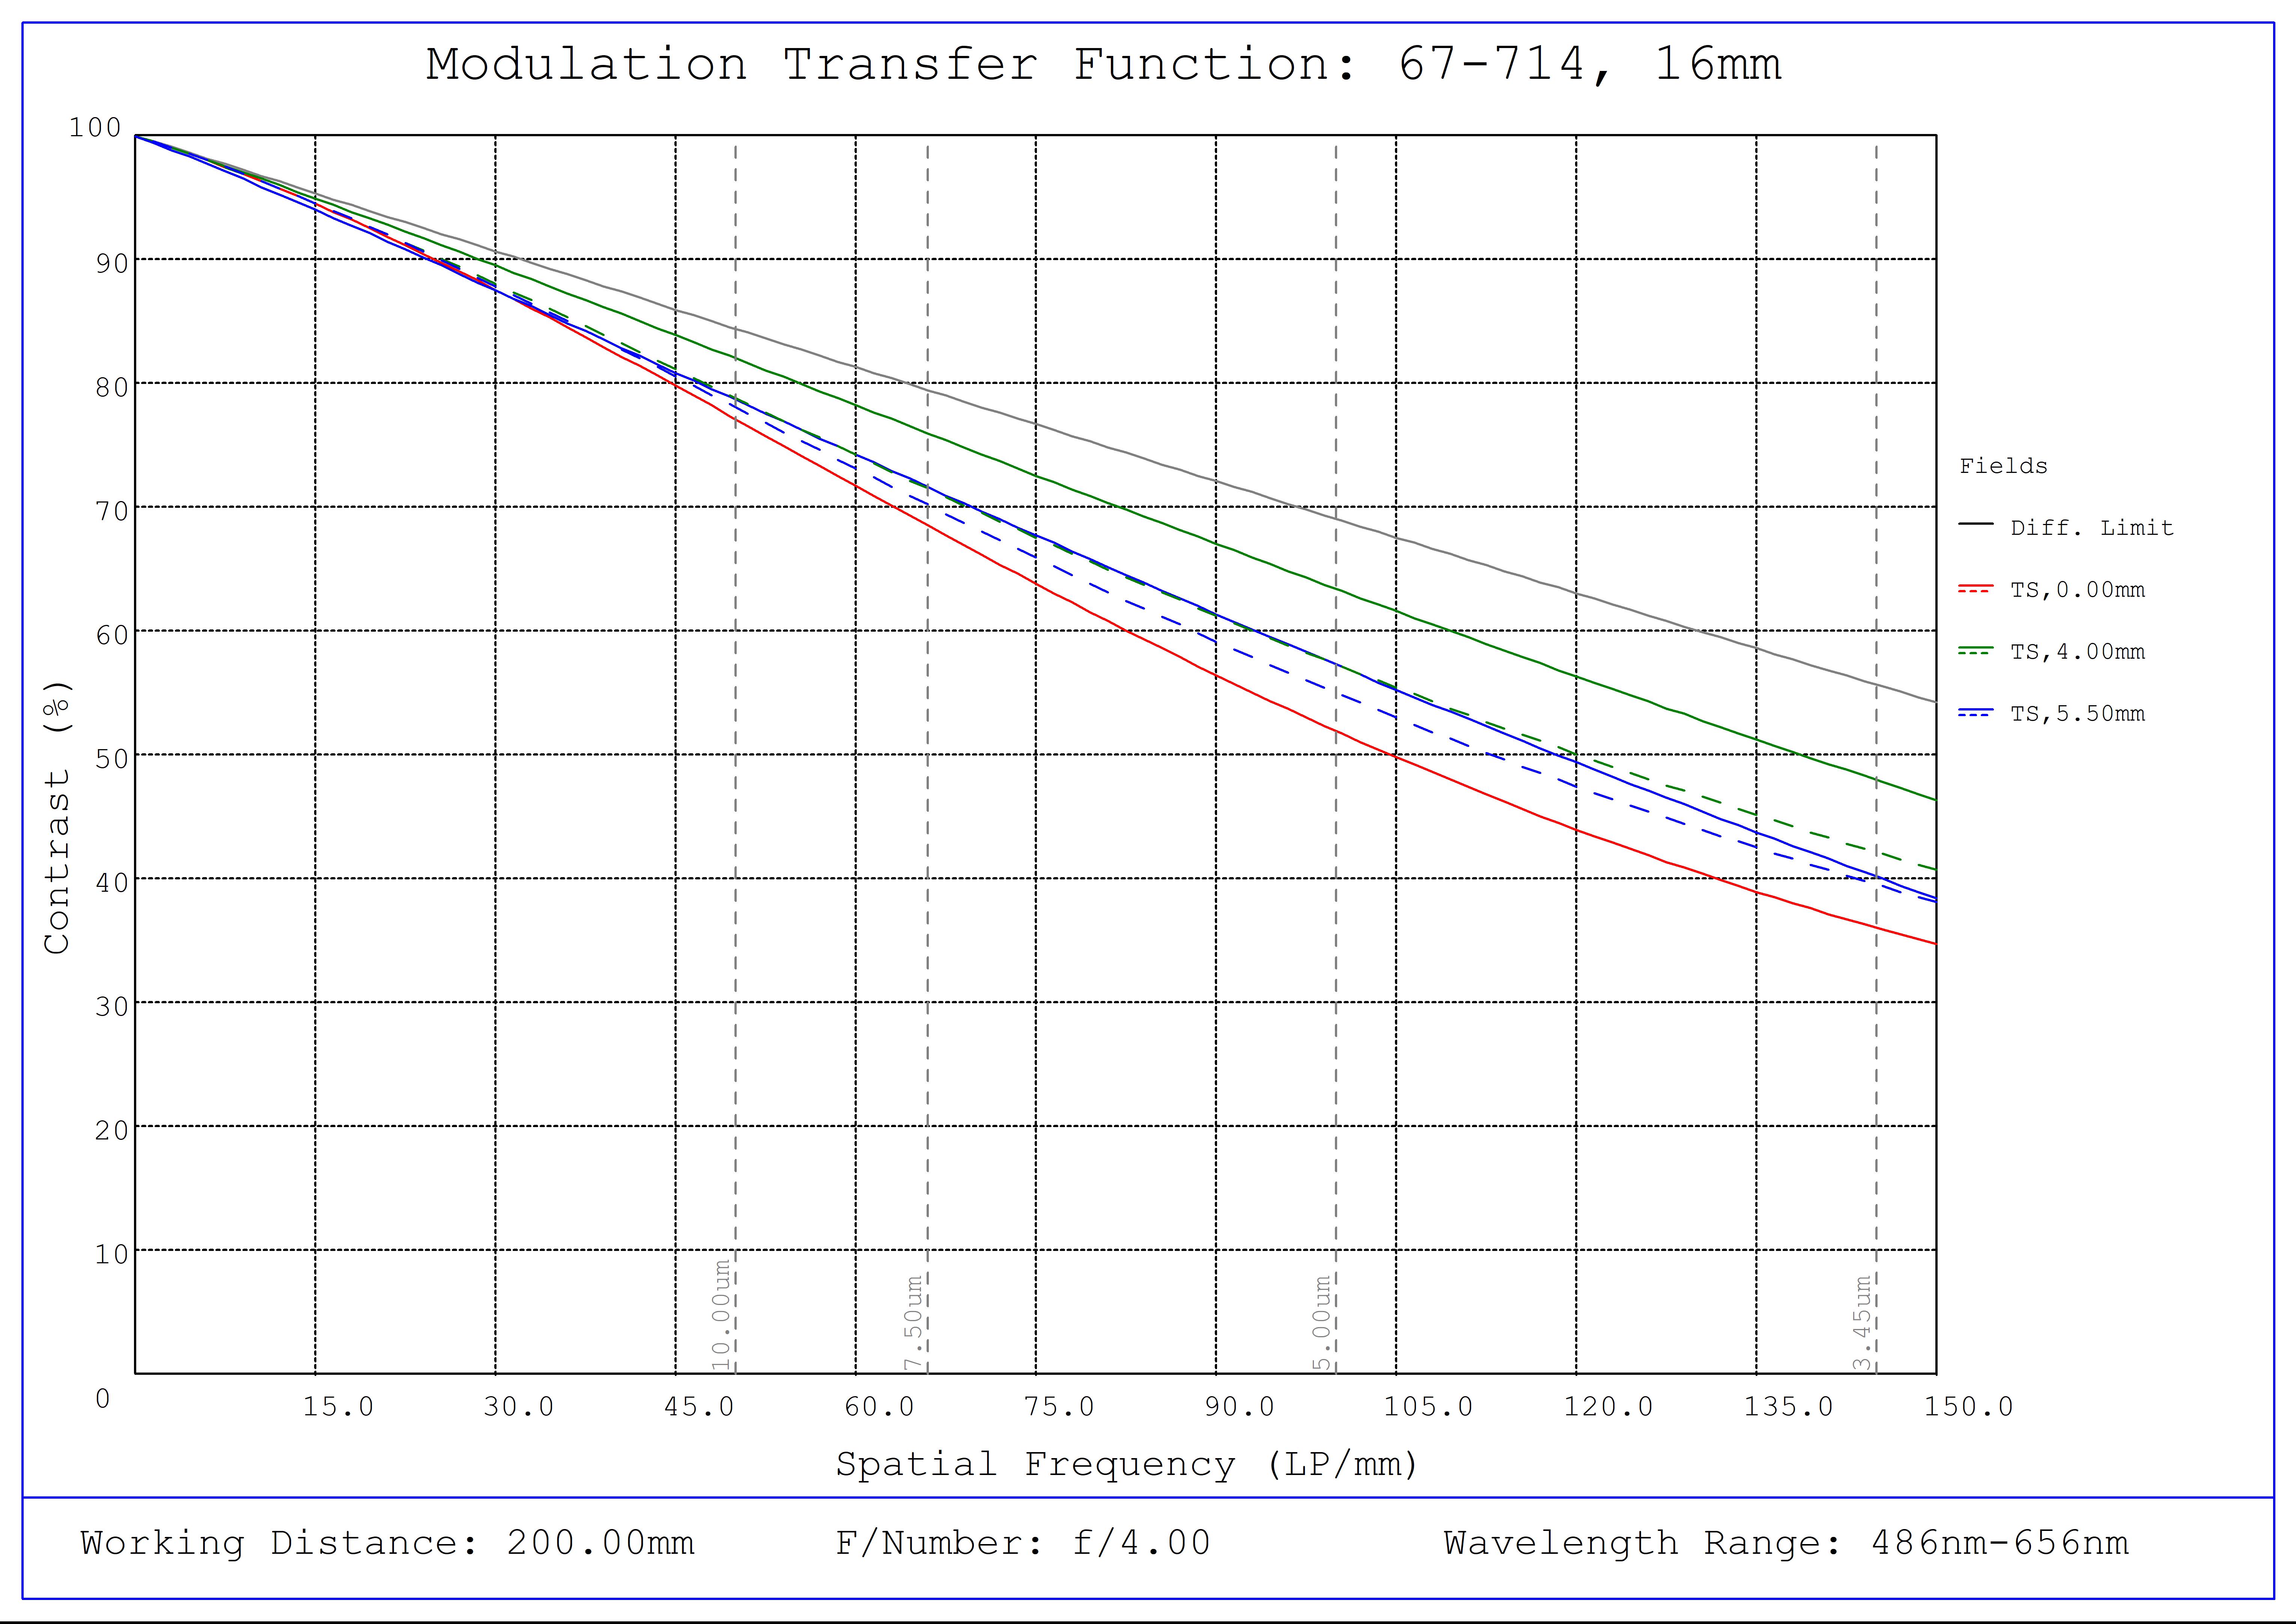 #67-714, 16mm C VIS-NIR Series Fixed Focal Length Lens, Modulated Transfer Function (MTF) Plot, 200mm Working Distance, f4